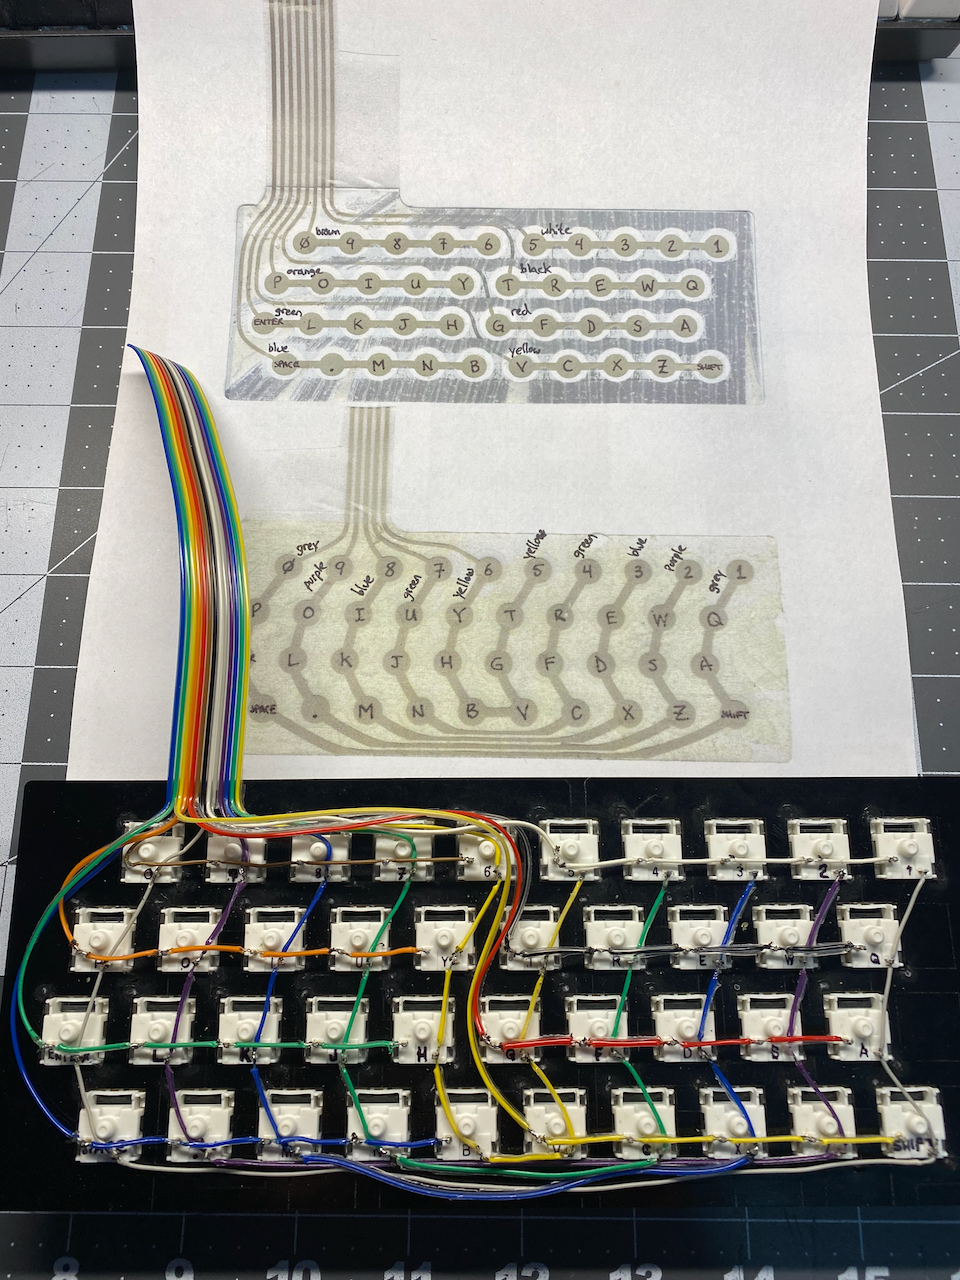 ZX81/TIMEX-SINCLAIR 1000 Custom Mechanical Keyboard Prototype - Part 3